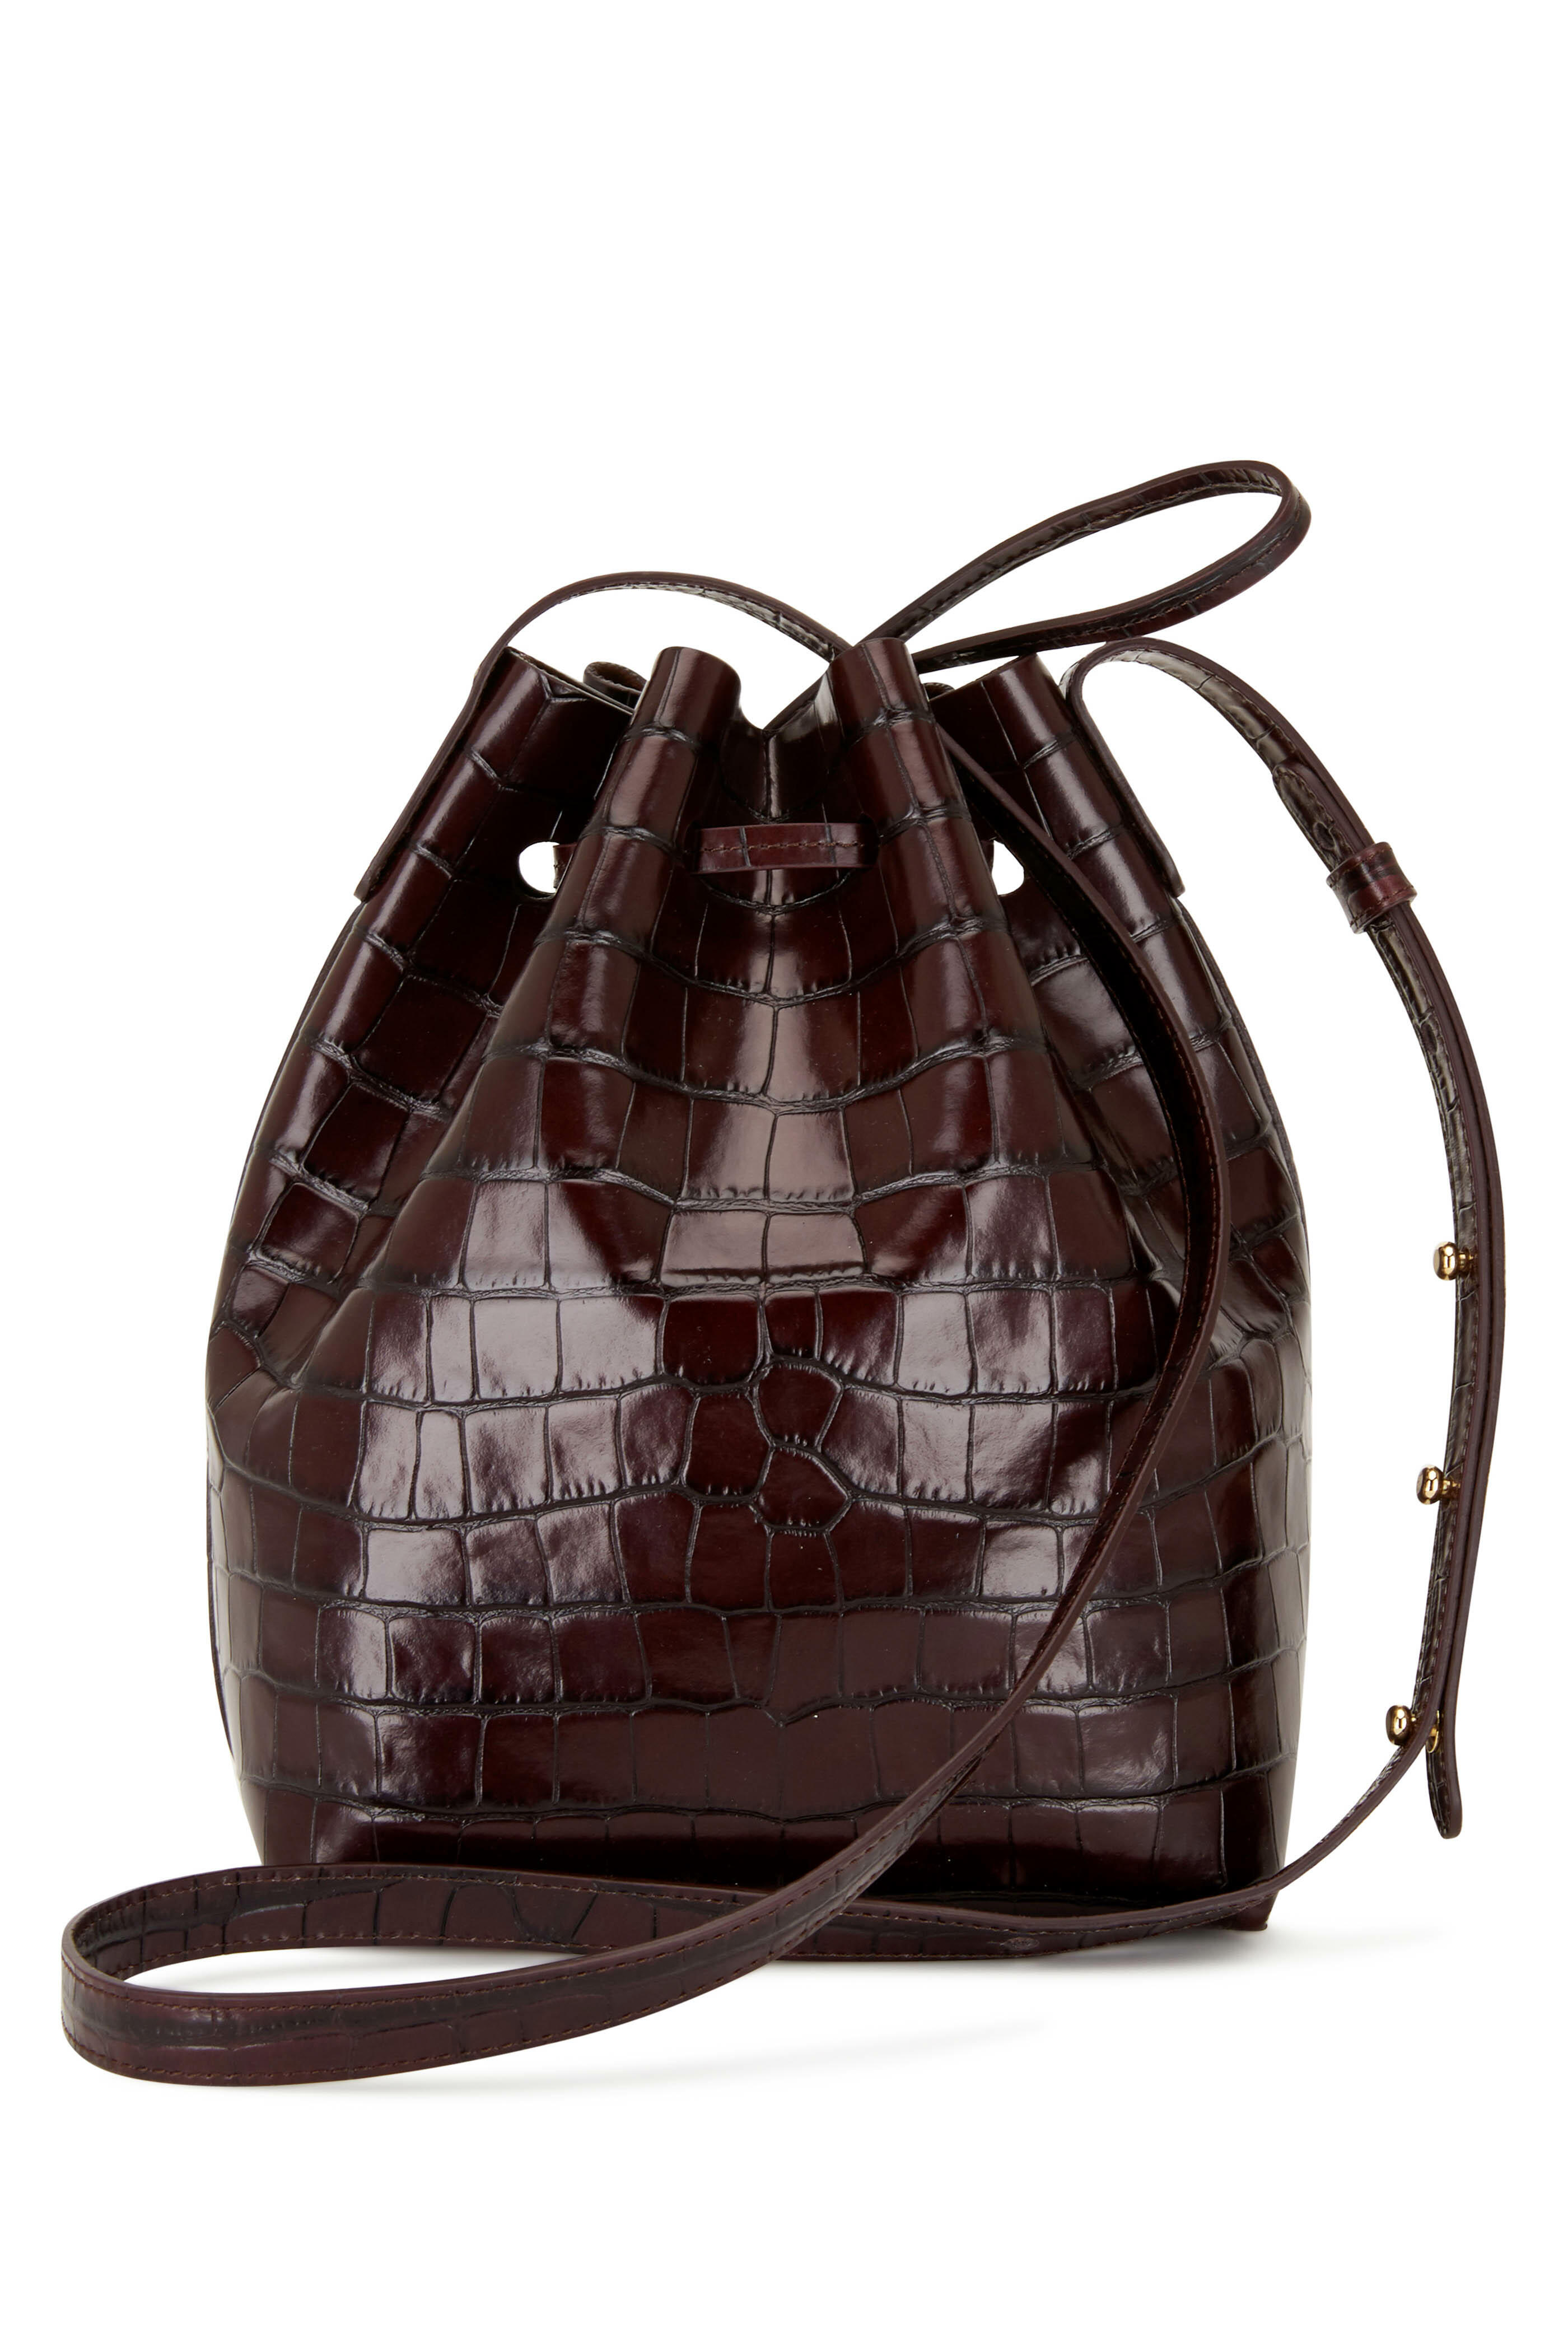 Misty Handbags Brown Crocodile Italian Leather Shoulder Bag, Best Price  and Reviews